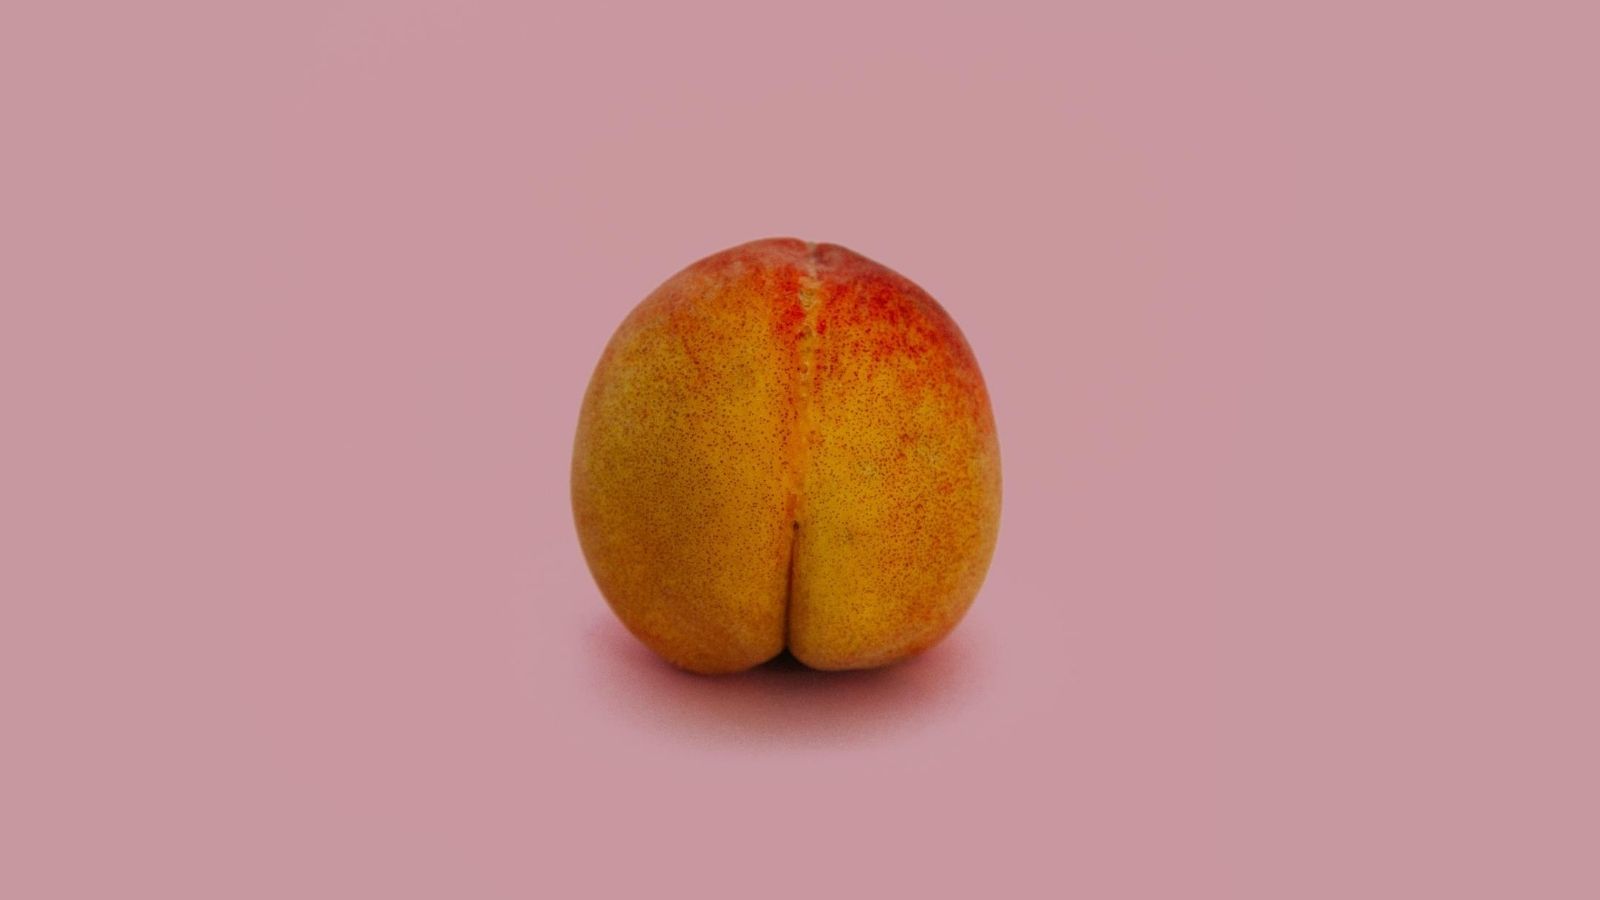 Conceptual image using a peach as a human butt